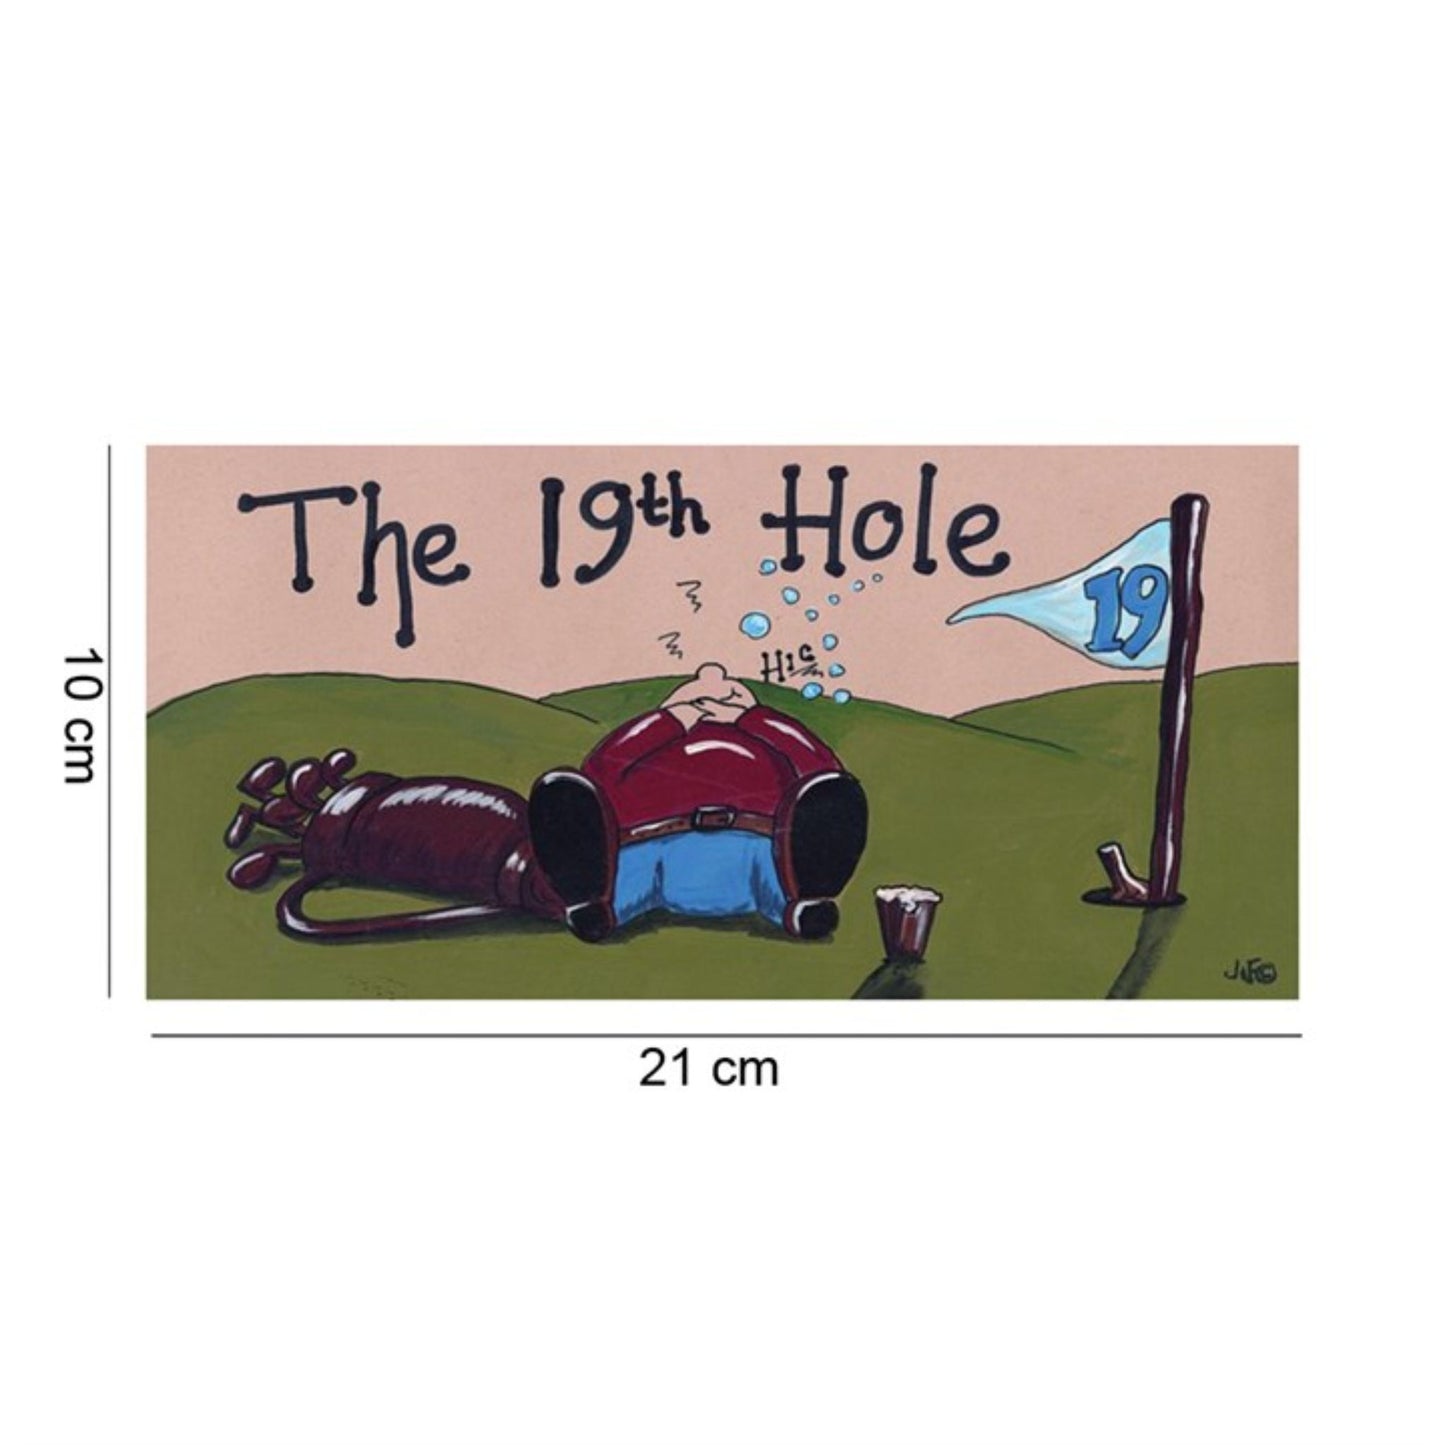 Golf Sign